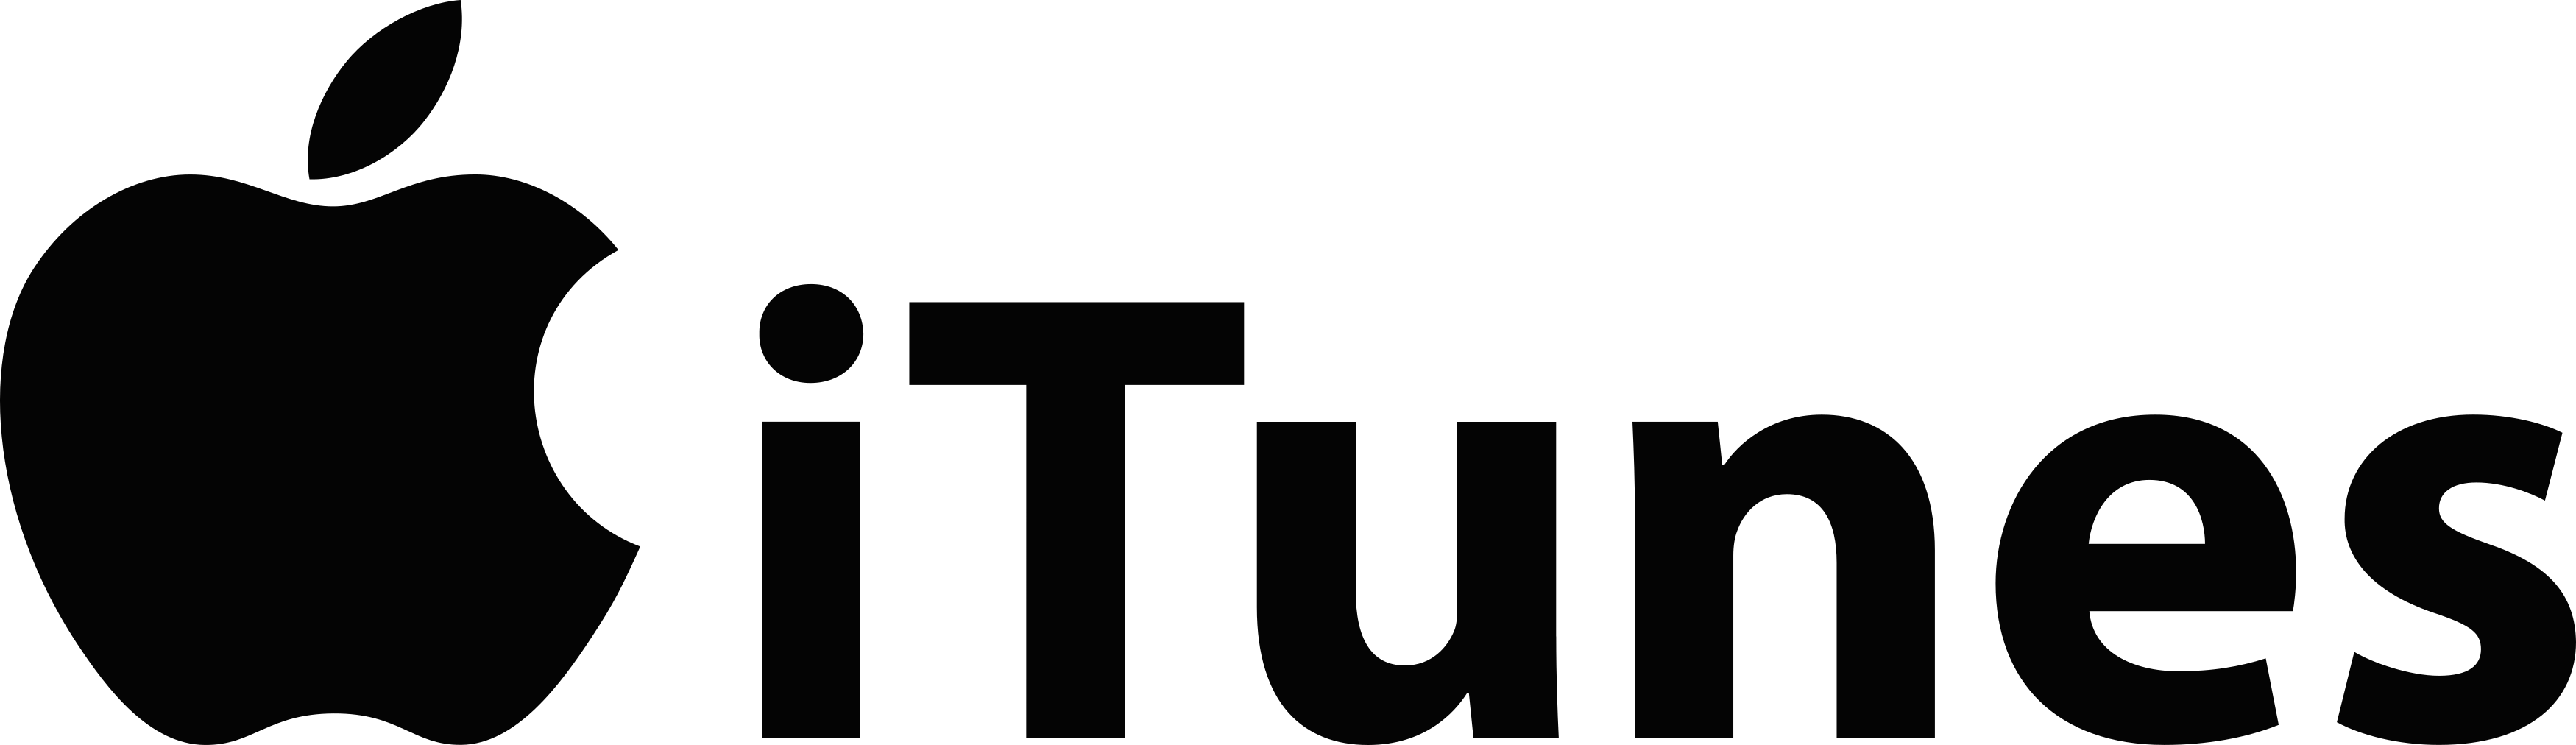 itunes logo.